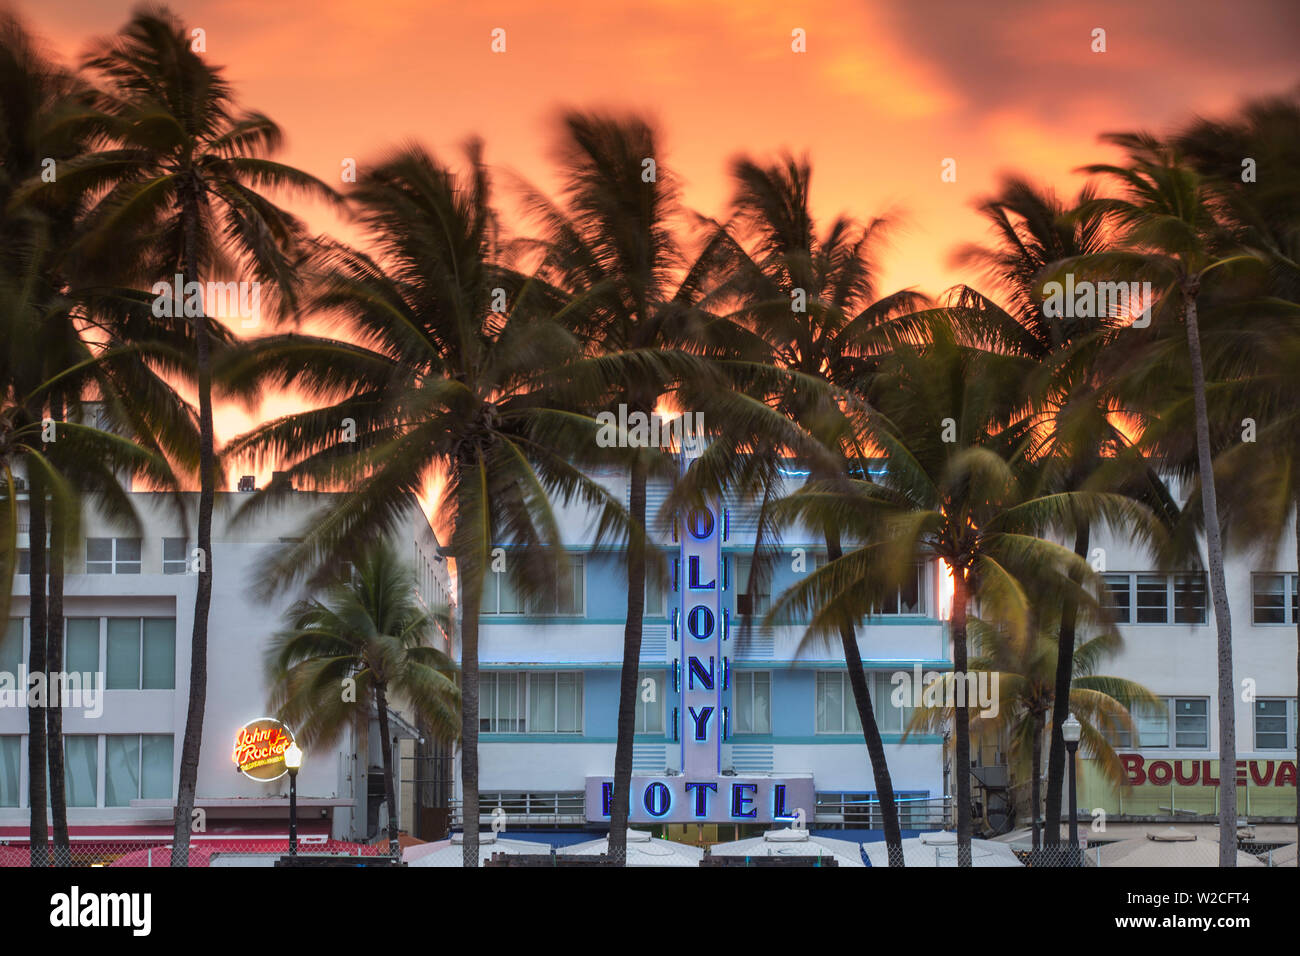 U.S.A, Miami, Miami Beach, South Beach, Art Deco Hotels on Ocean drive Stock Photo